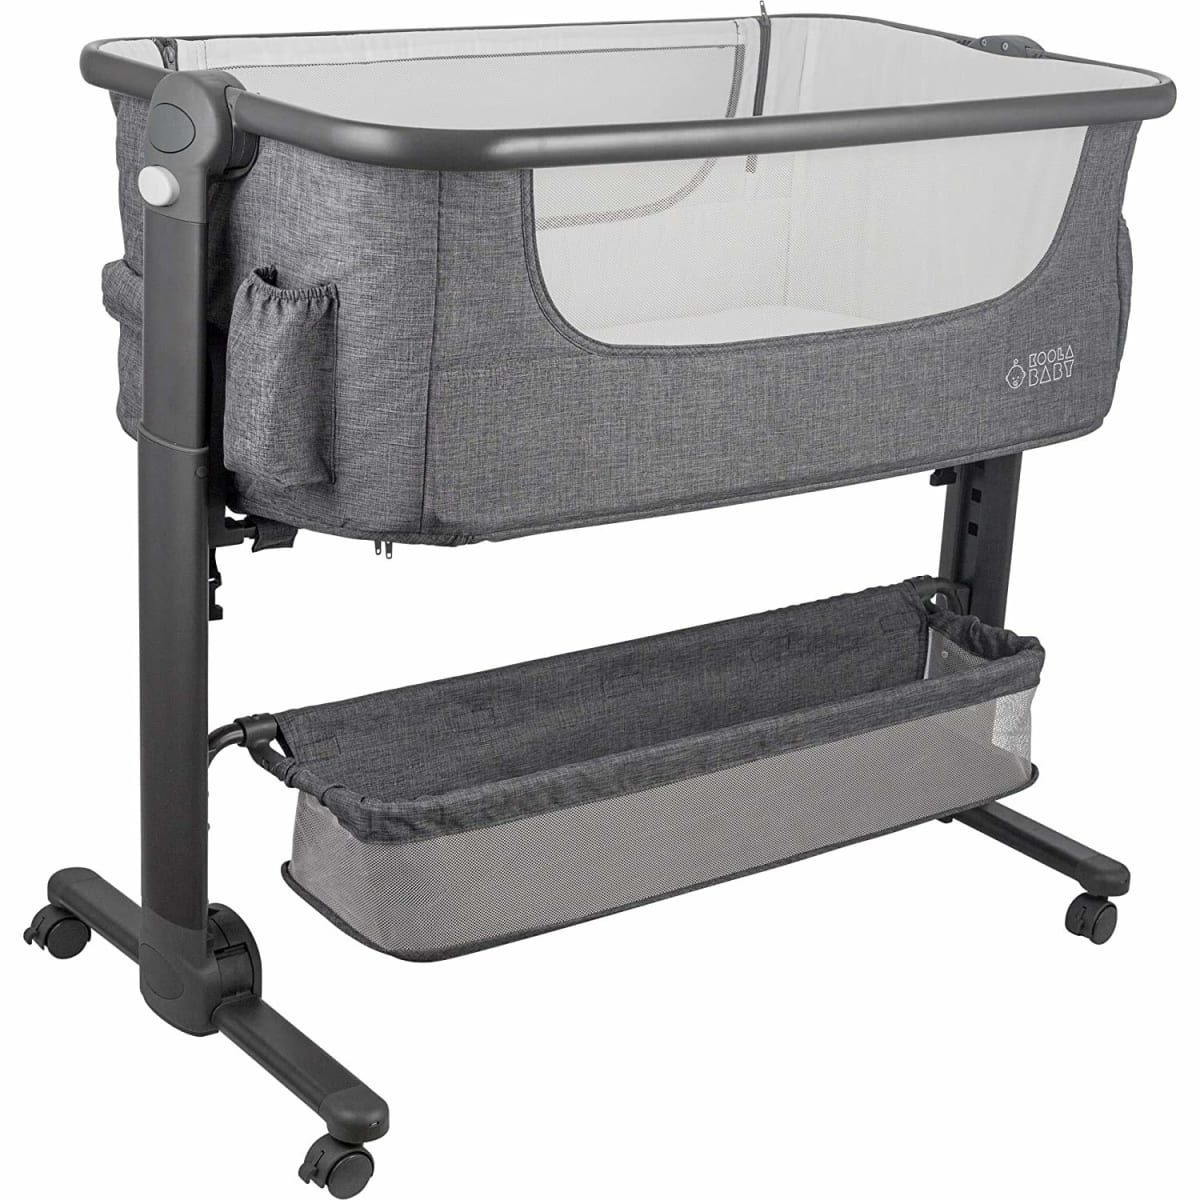 Easy Folding Portable Crib with Storage Basket for Newborn